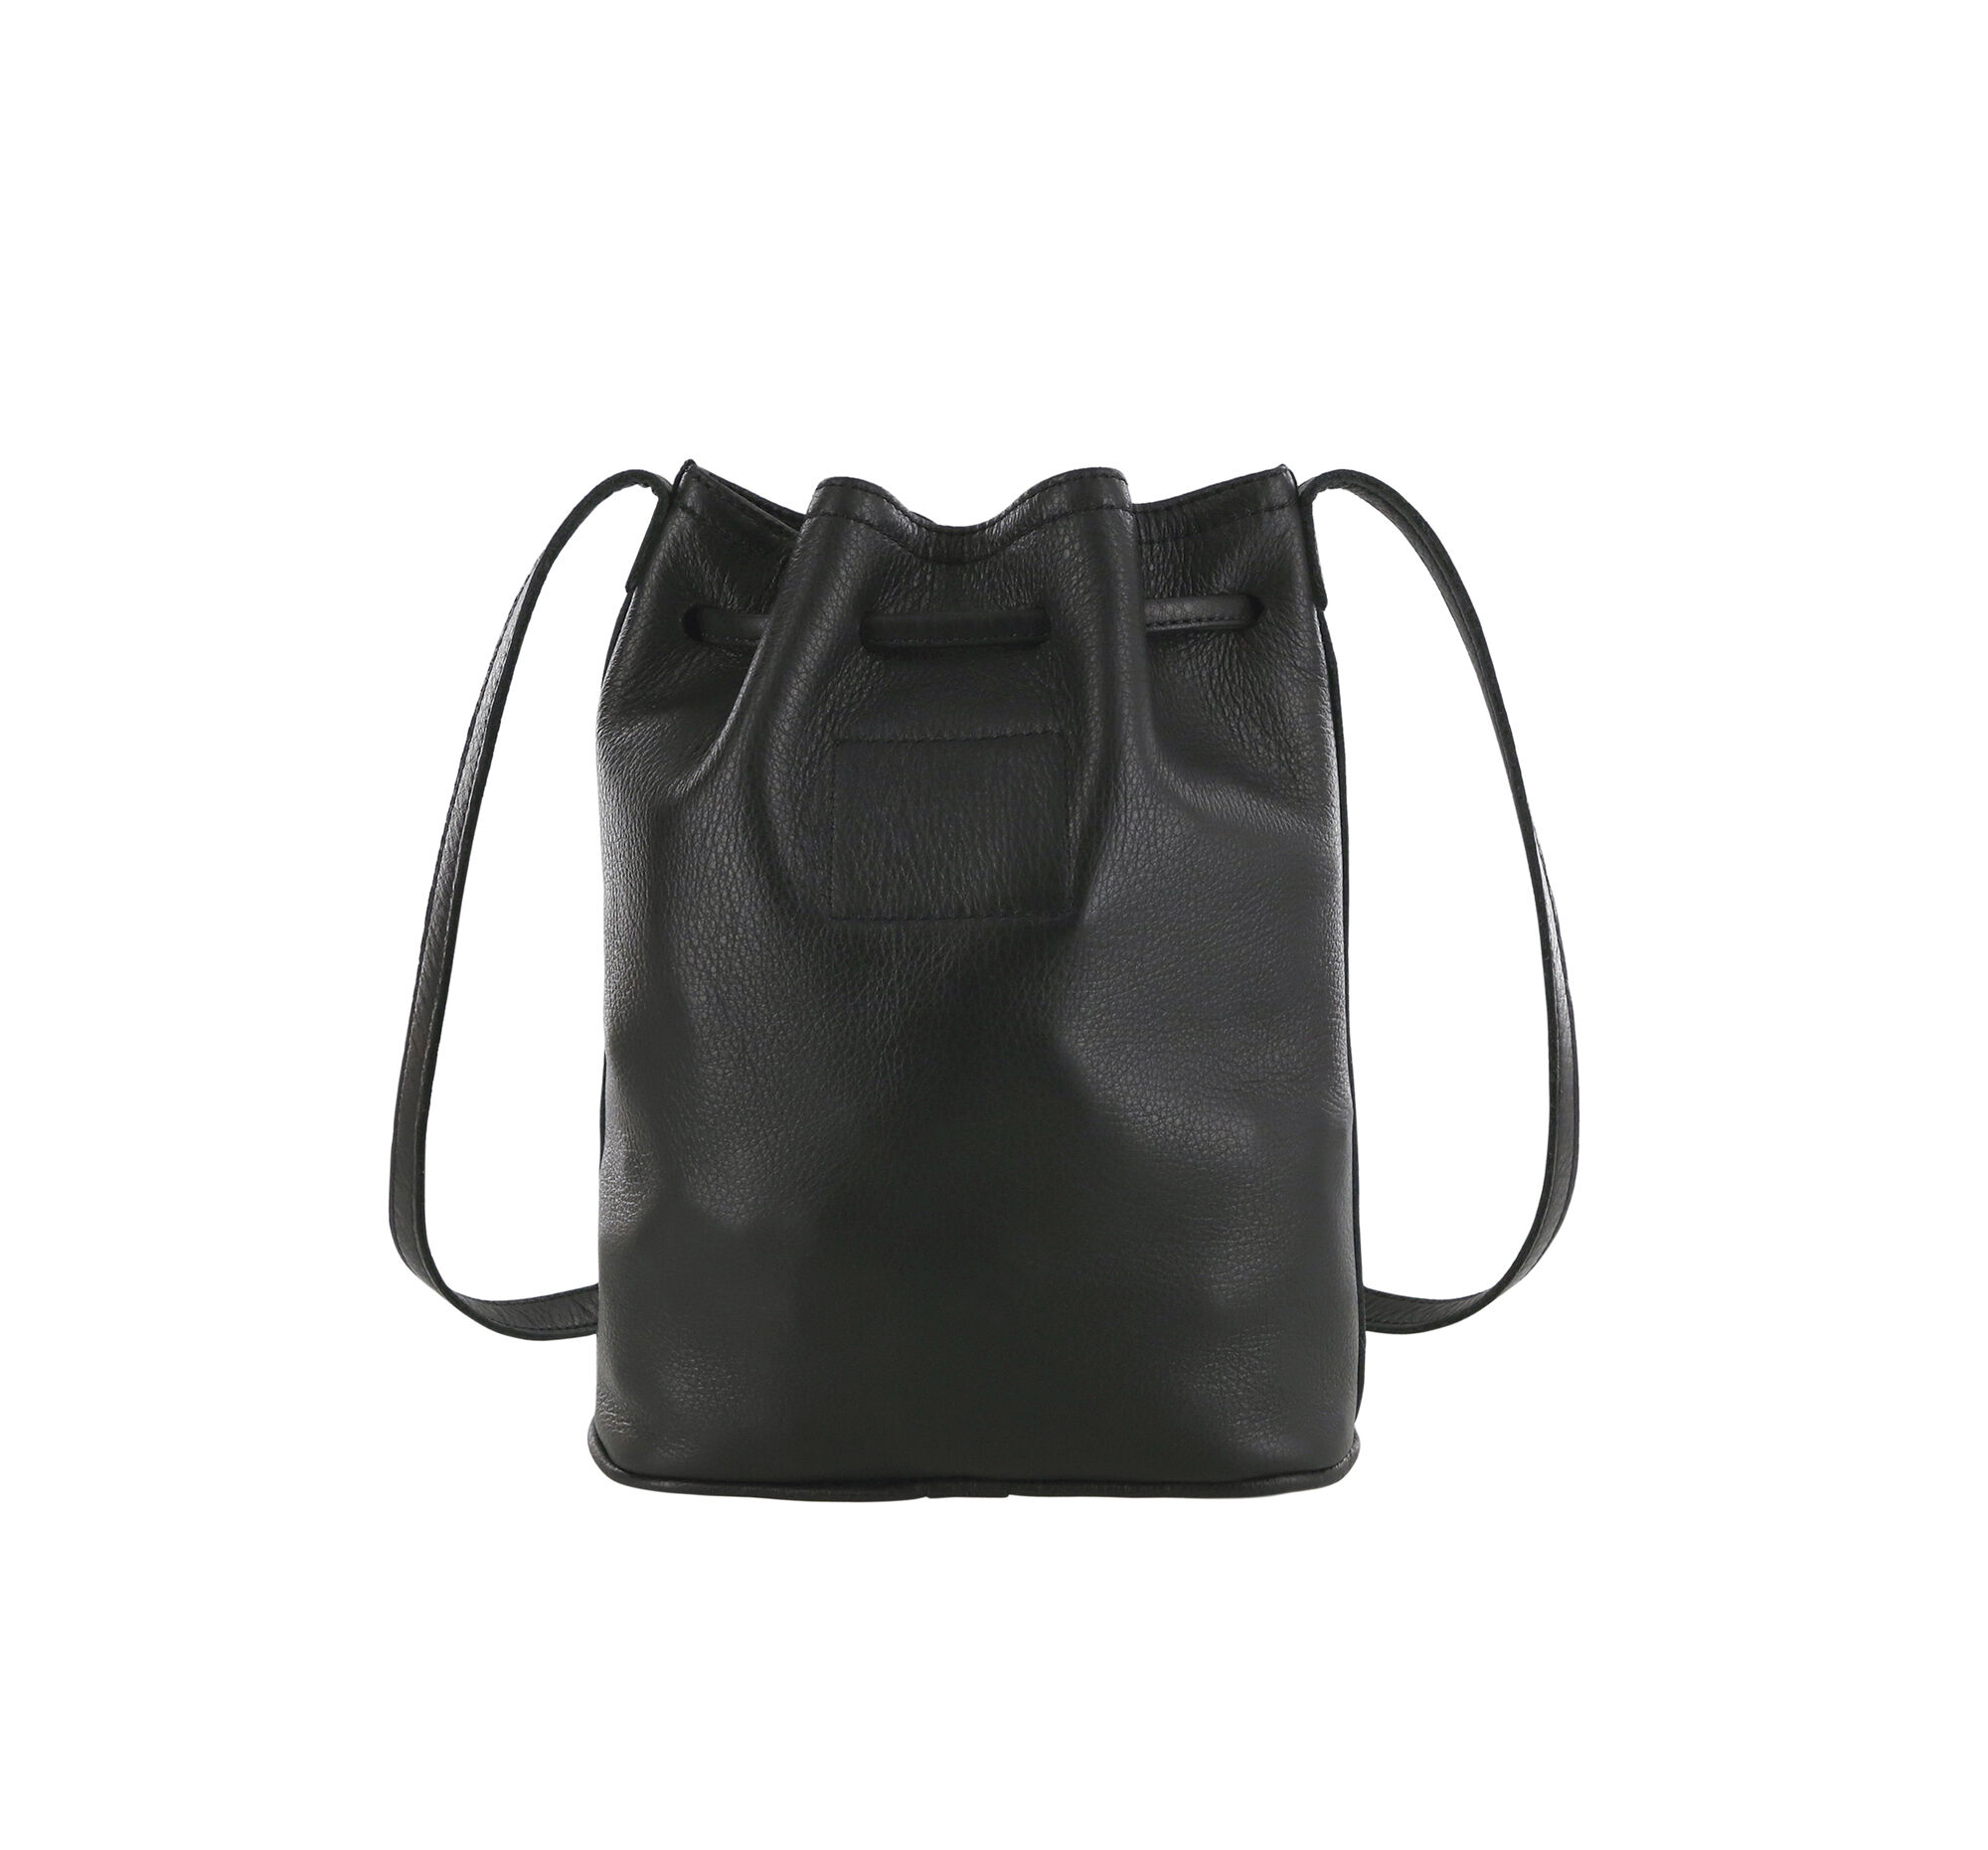 Baggu Brand Leather Drawstring Bucket Bag/Purse | Bucket bag, Drawstring  bucket bag, Bags